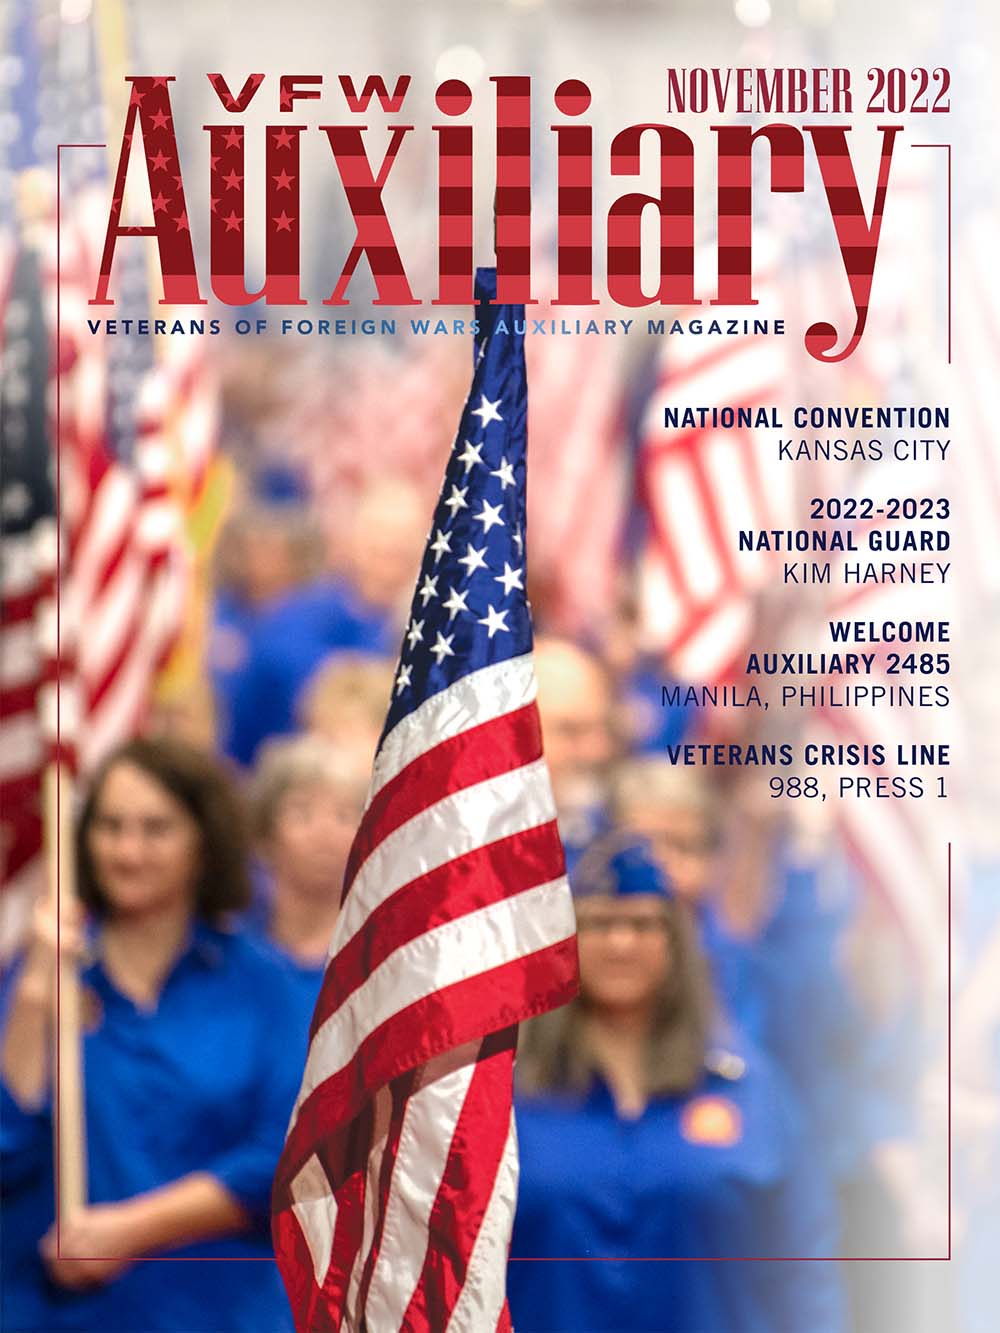 VFW Auxiliary Magazine, November 2022 cover